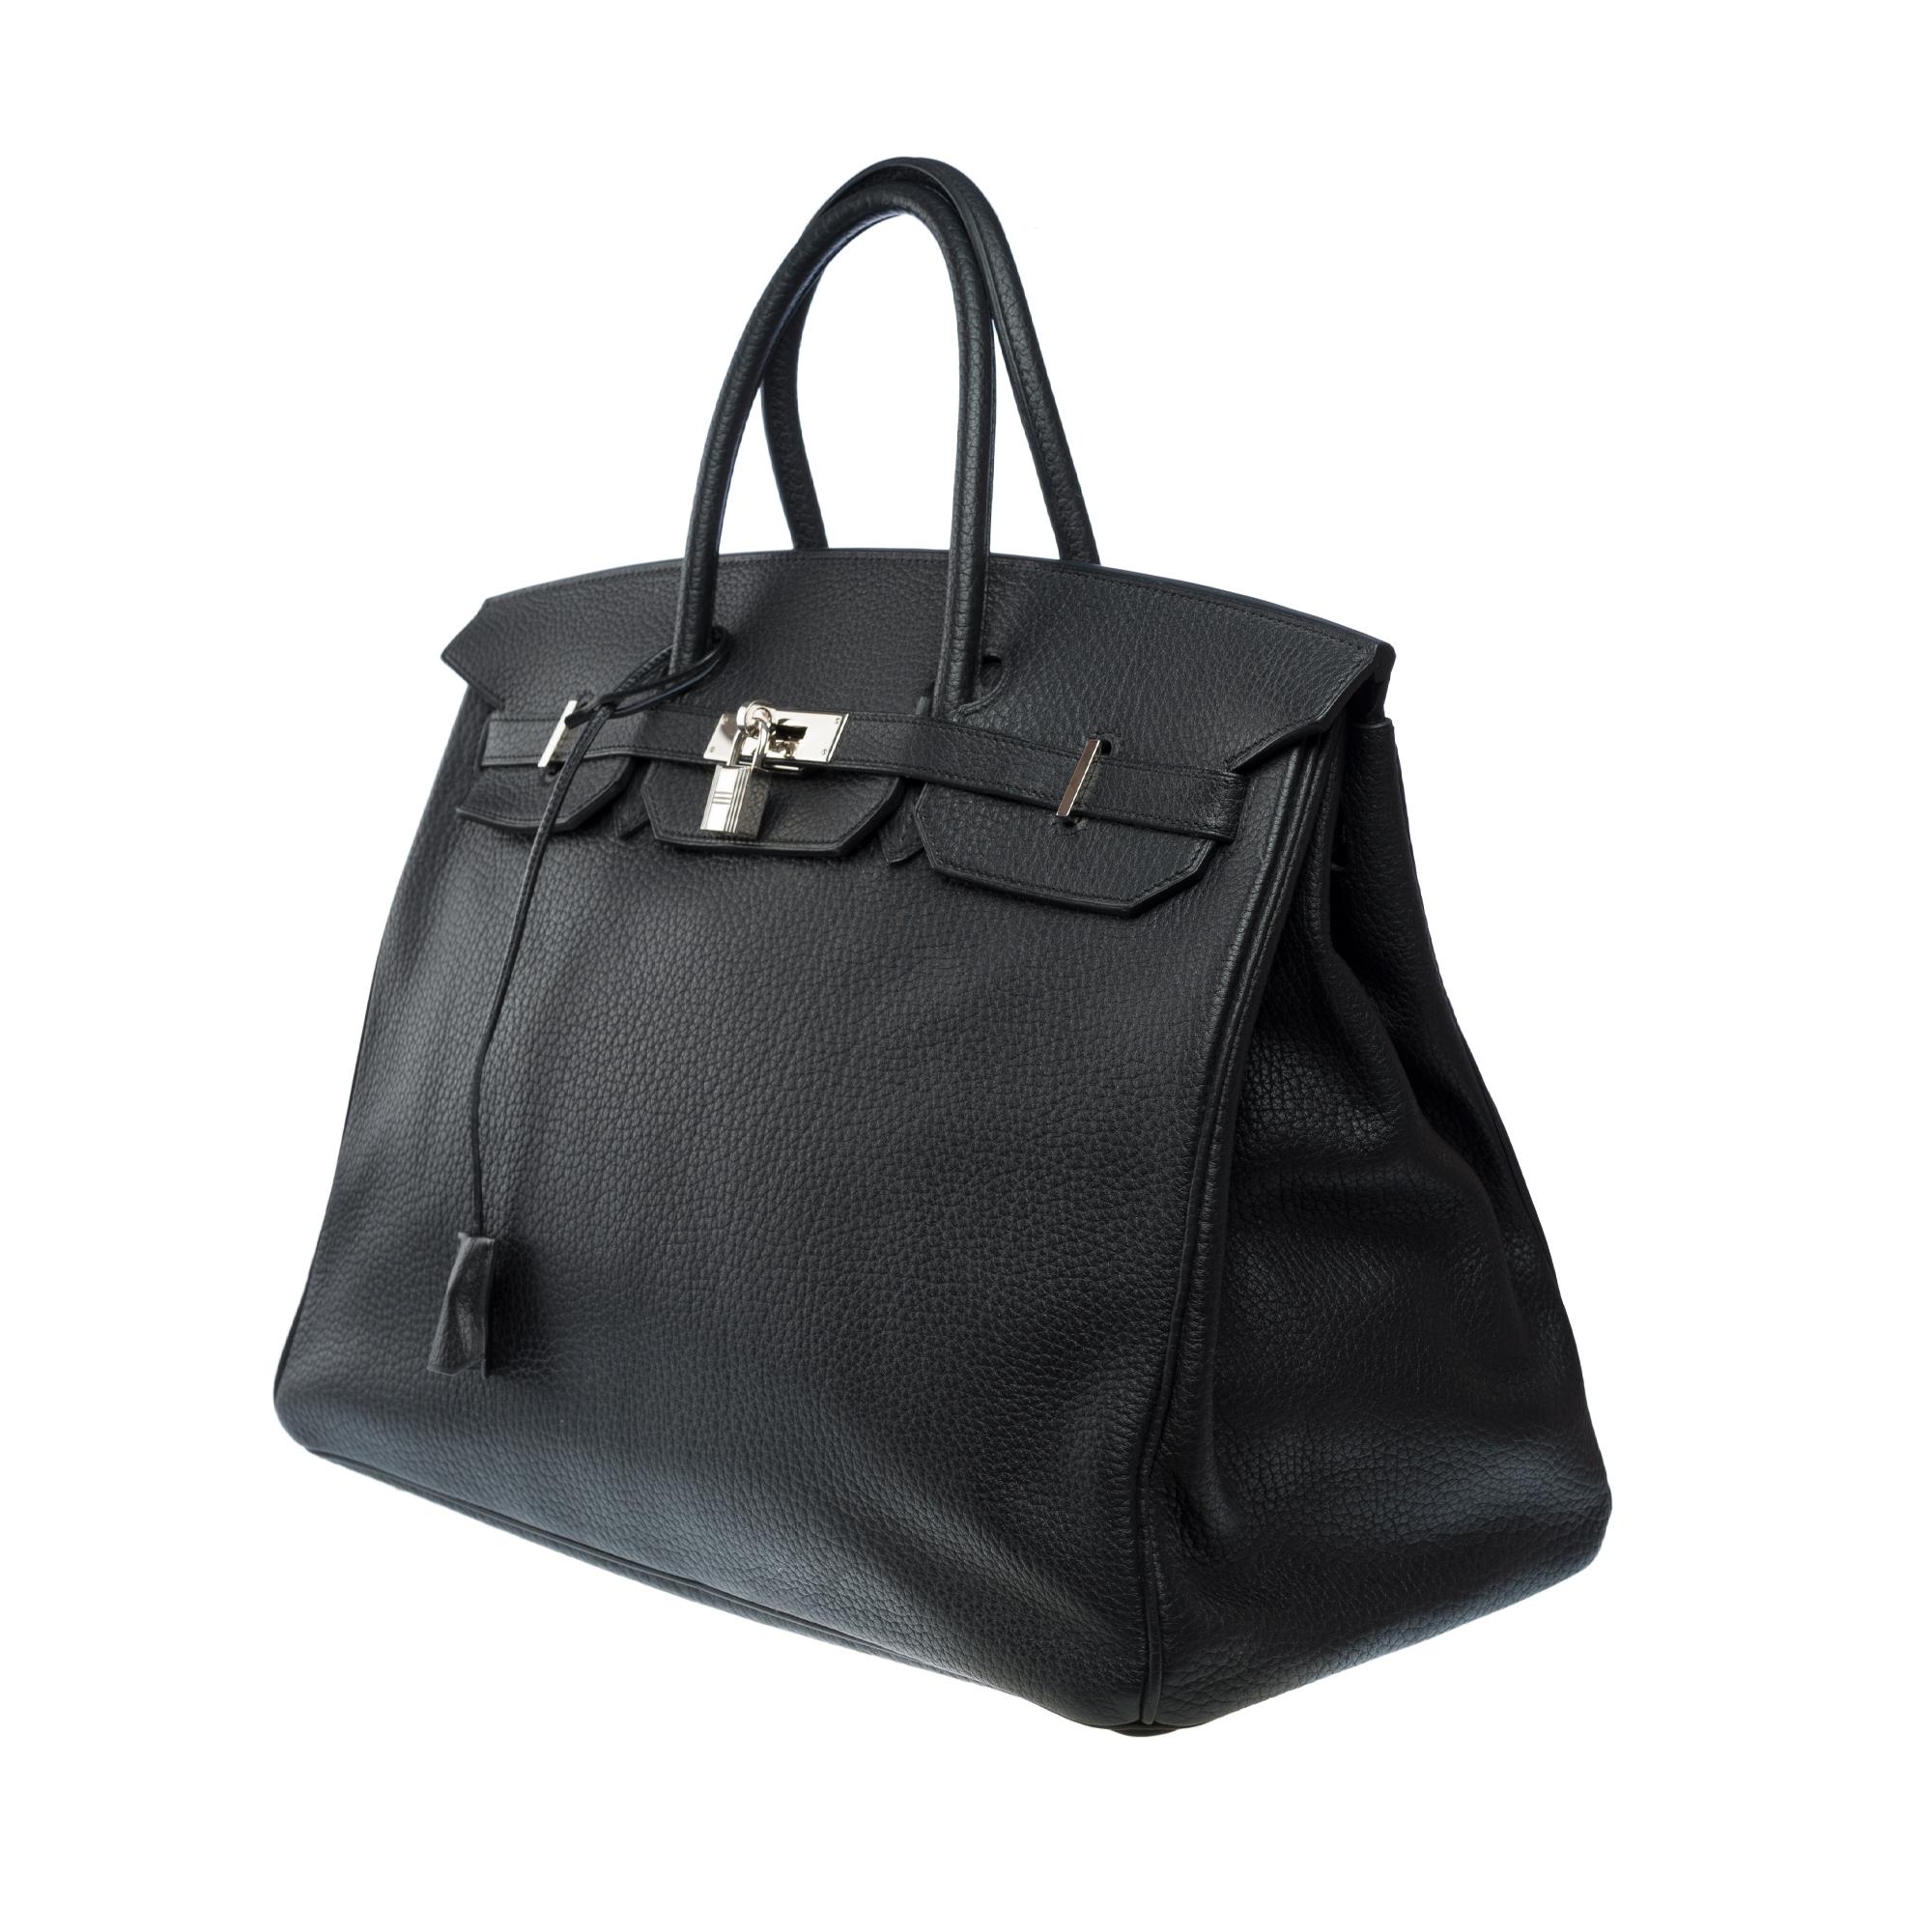 Women's or Men's Classy Hermes Birkin 40cm handbag in Black Fjord calf leather, SHW For Sale